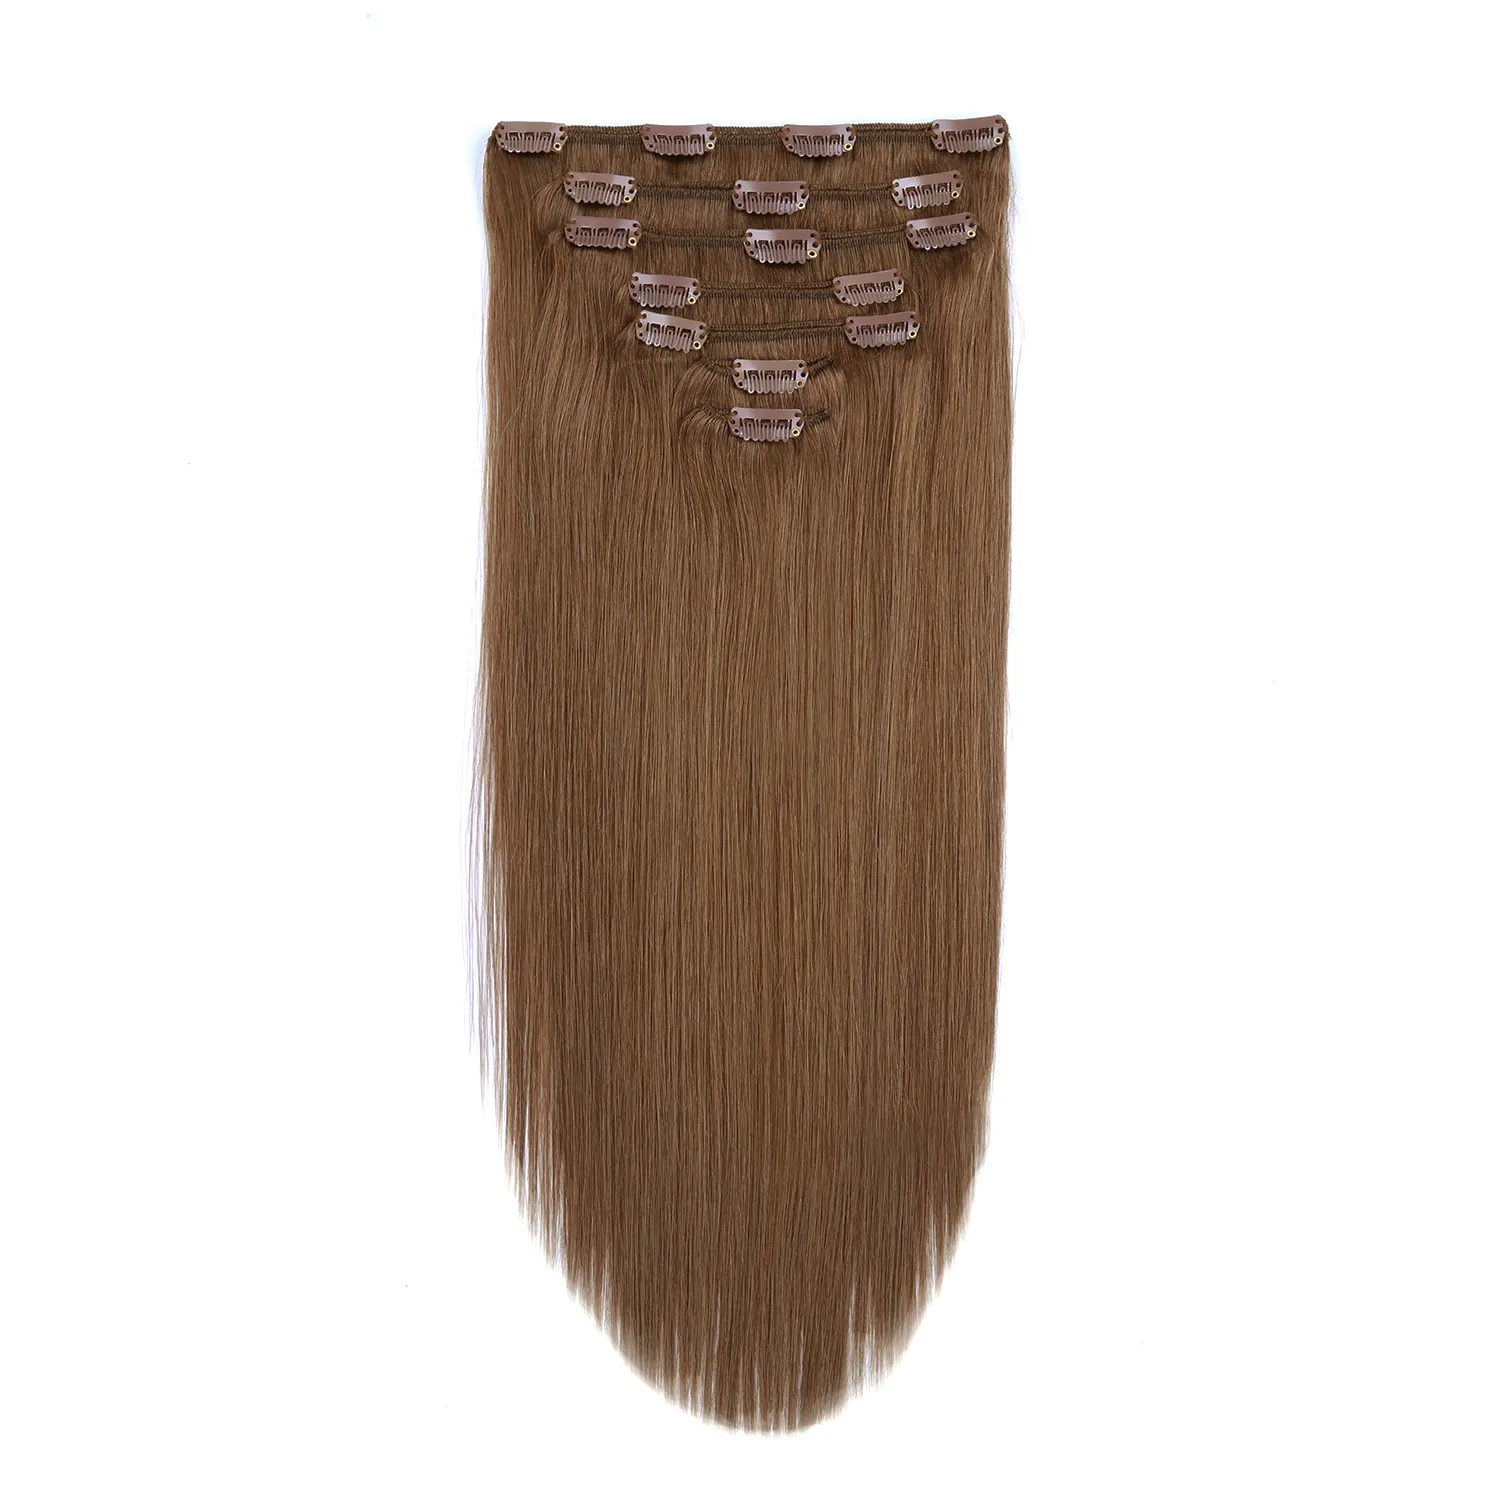 Double drawn virgin russian clip in hair extensions Straight Human Clip in Hair extension for Women clip in hair extensions